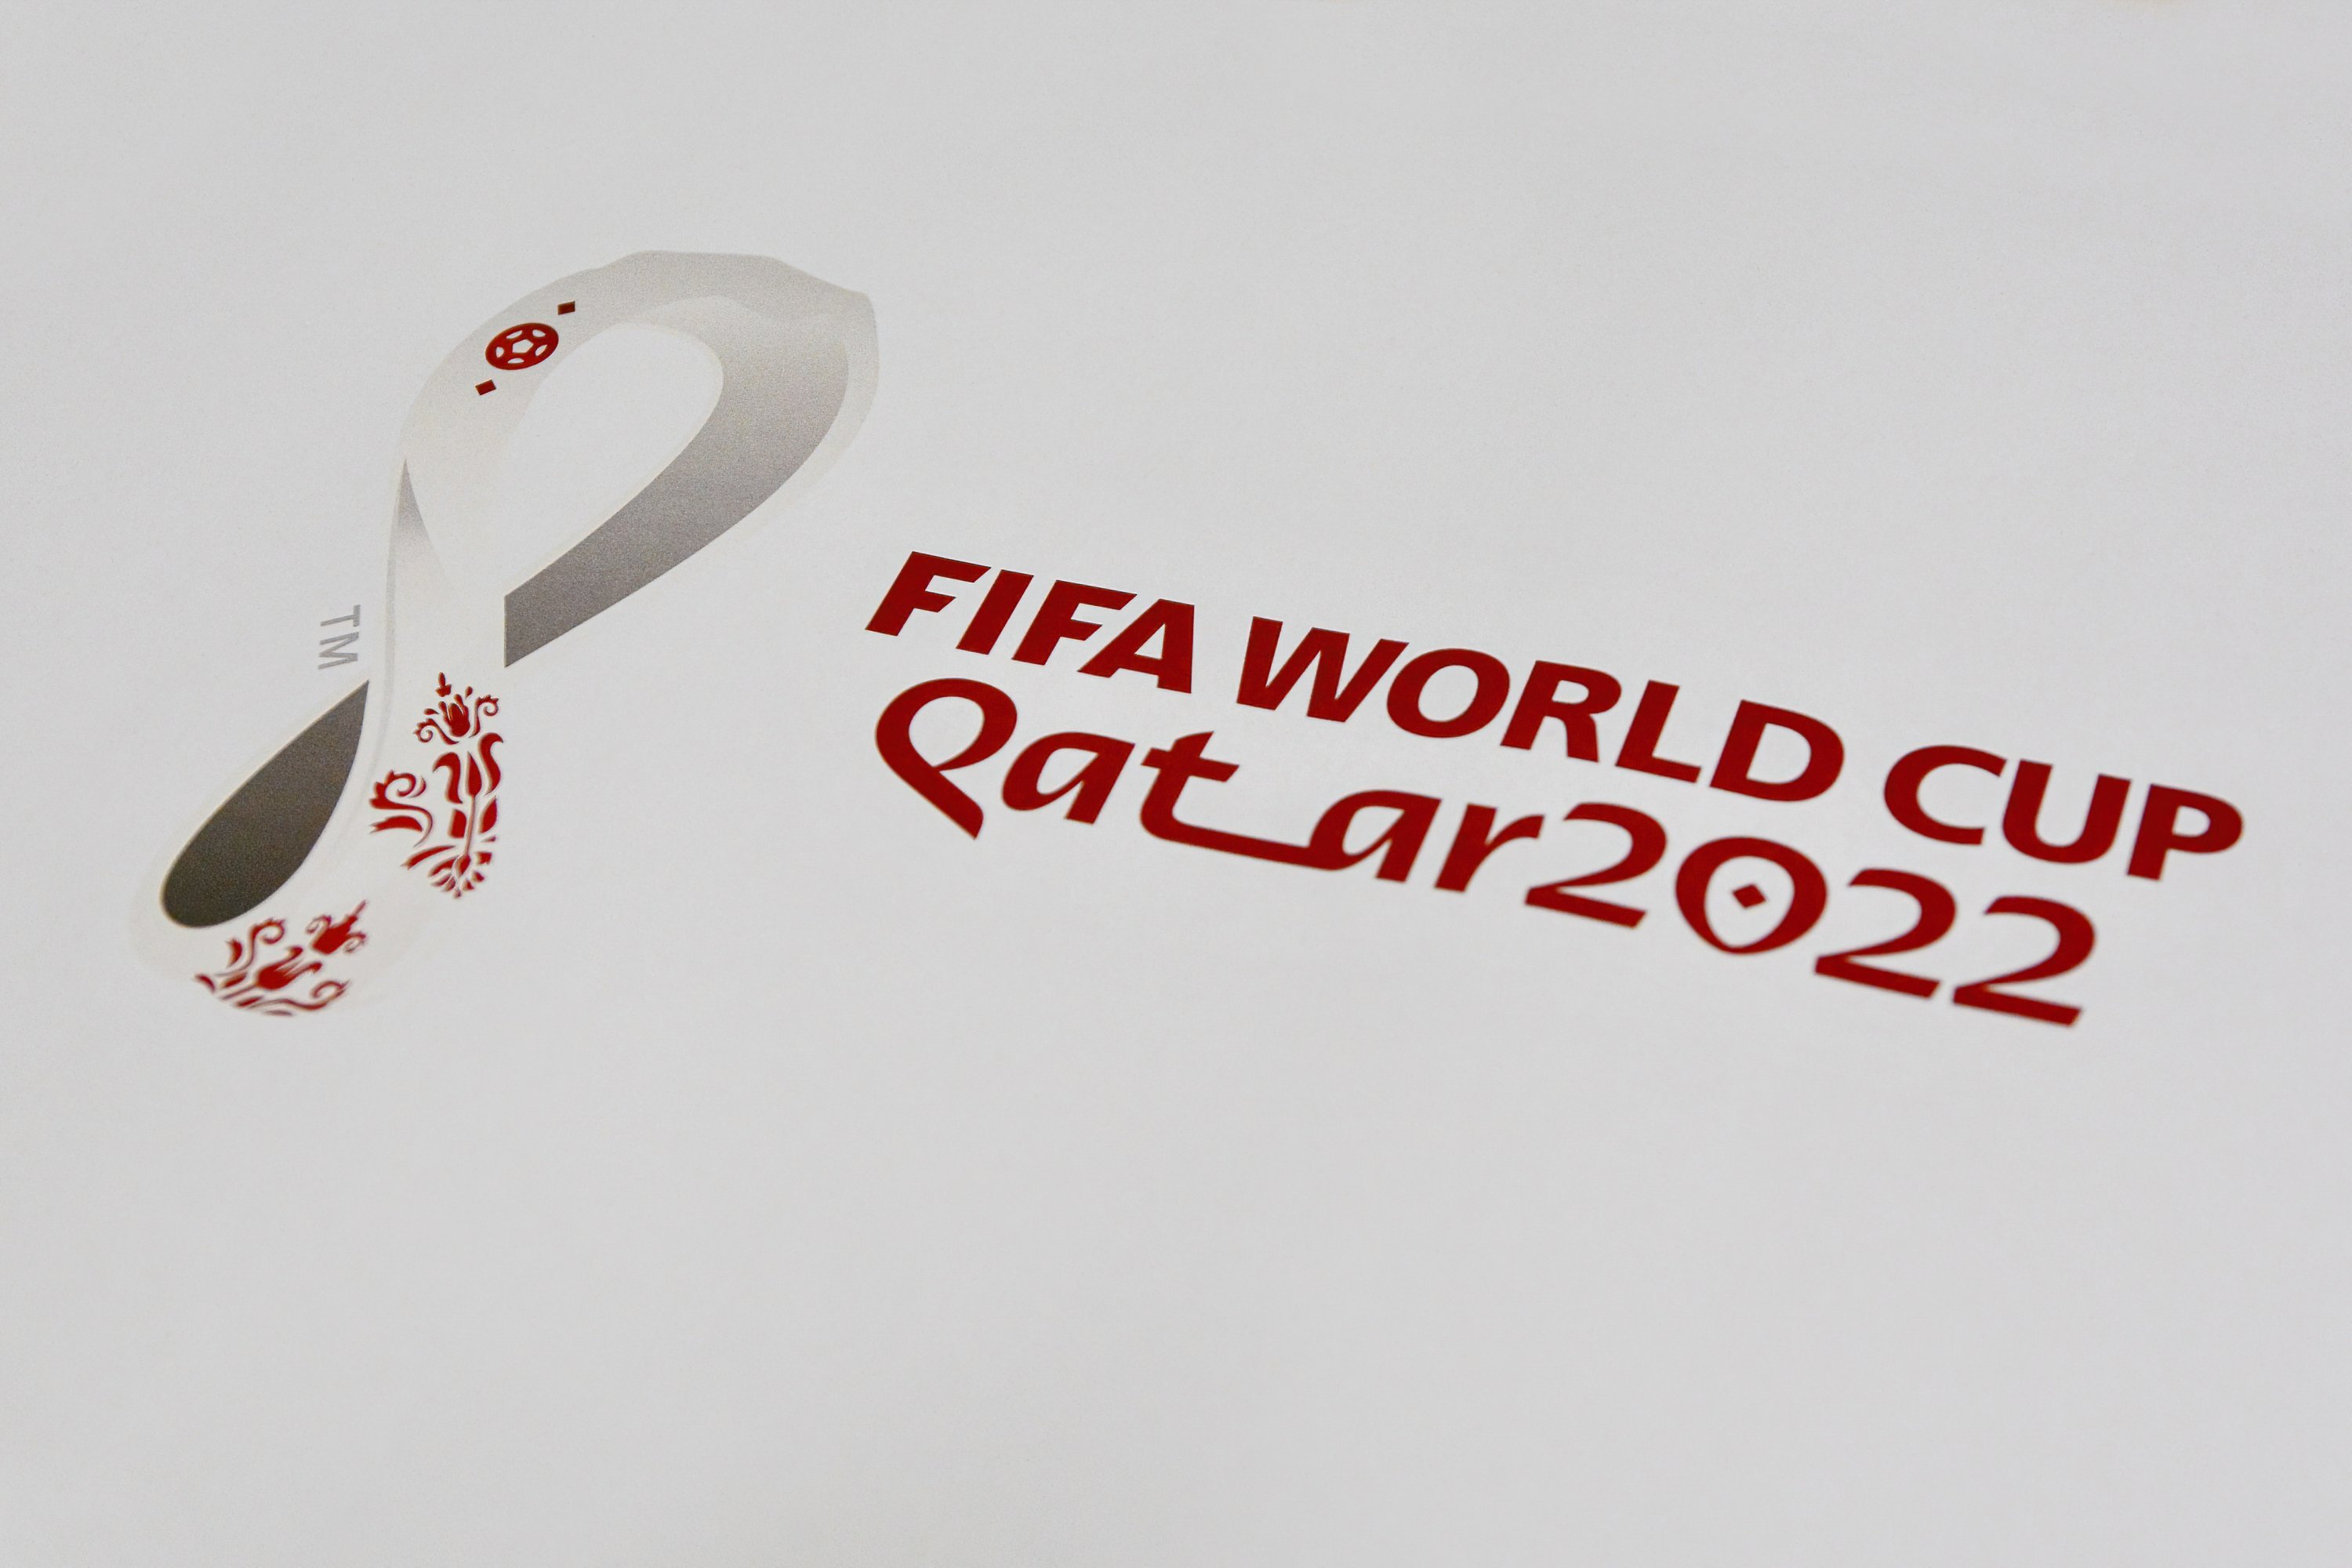 Qatar World Cup 2022,